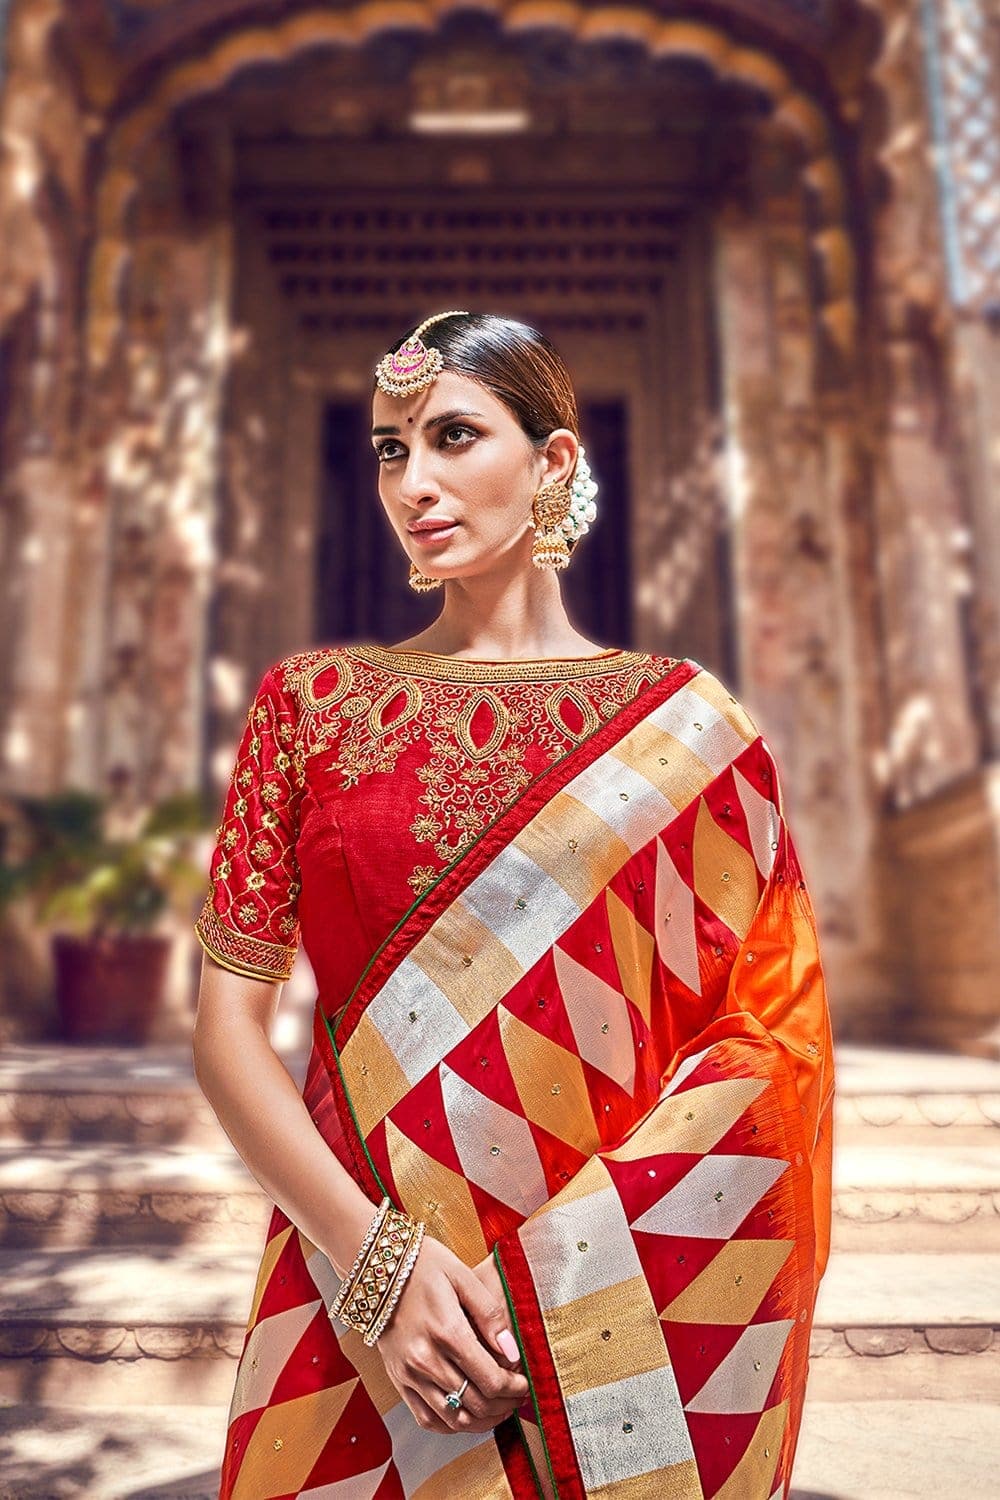 Orange And Red Banarasi Saree With Embroidered Silk Blouse